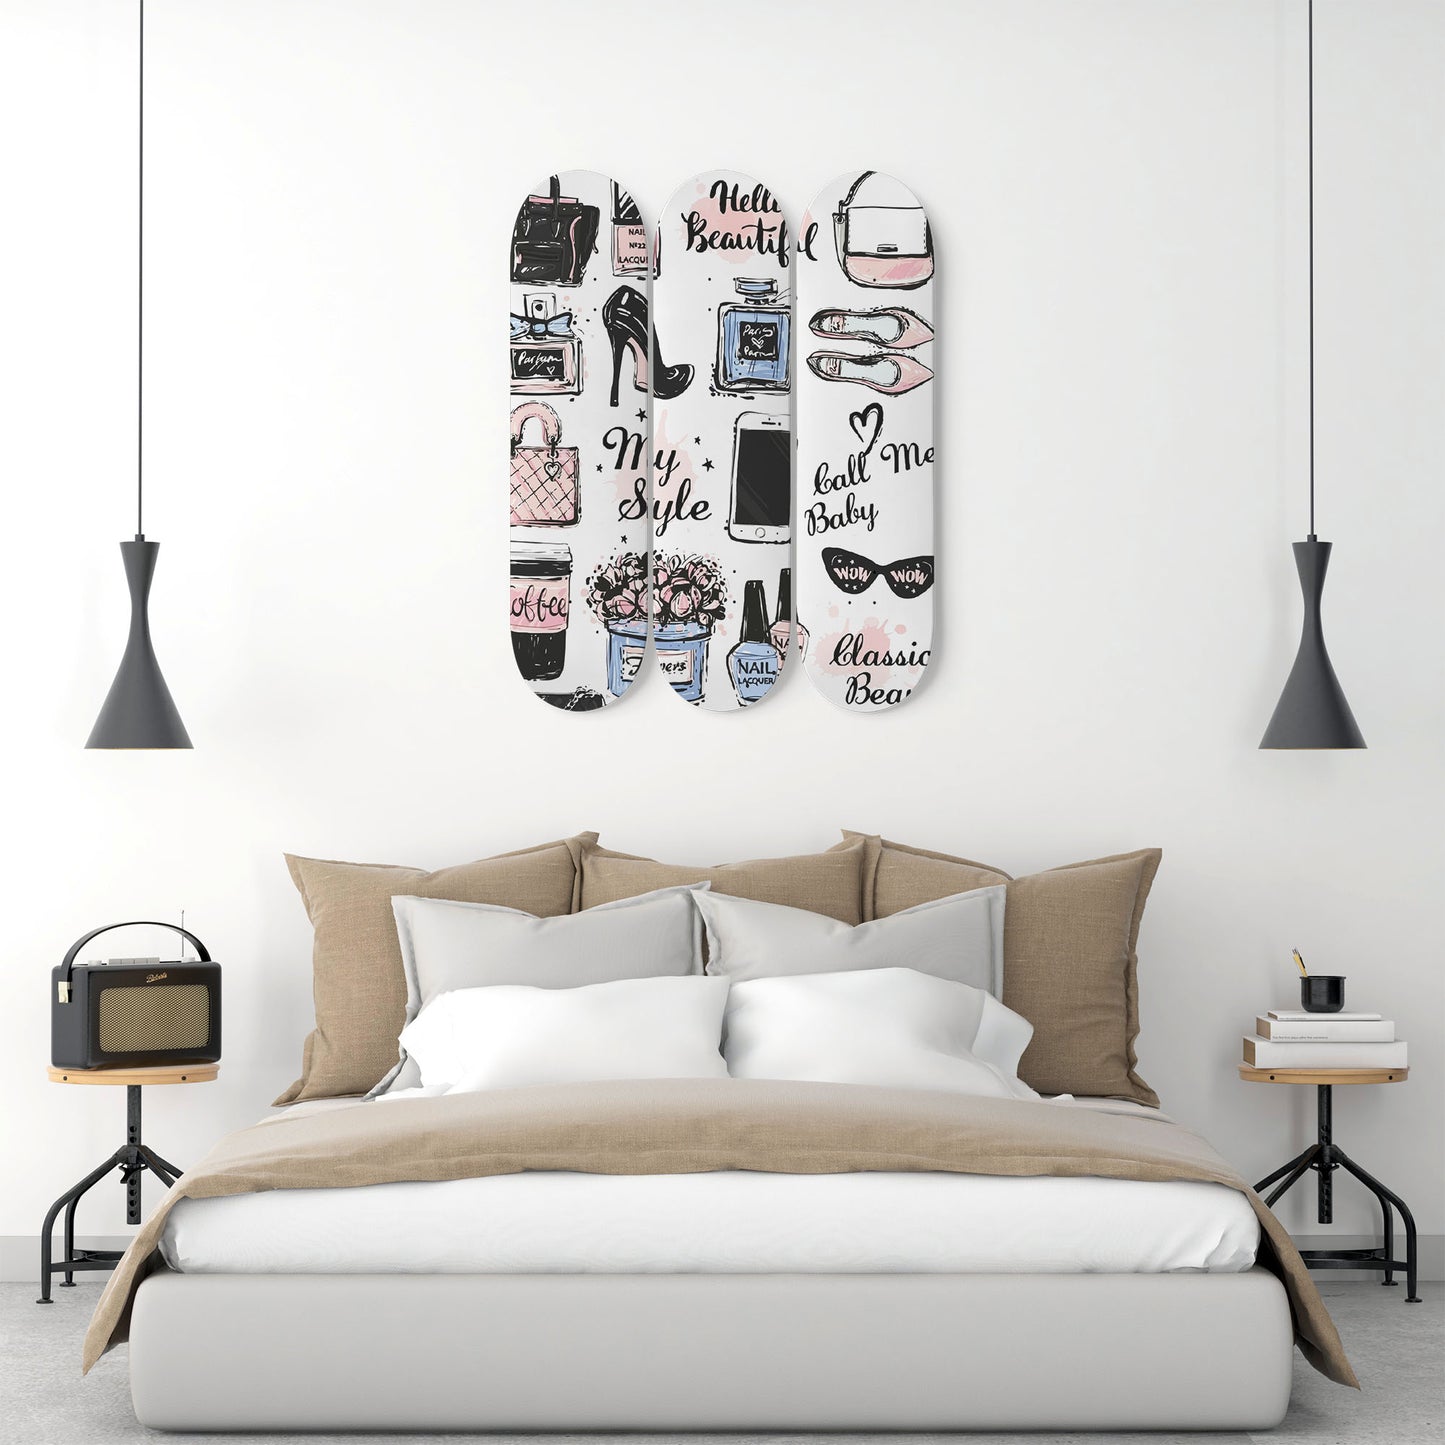 Fashion 7 | 3 Set of Skateboard Deck Wall Art | Wall Hanging Room Decor | Maple Wood | Birthday Gift